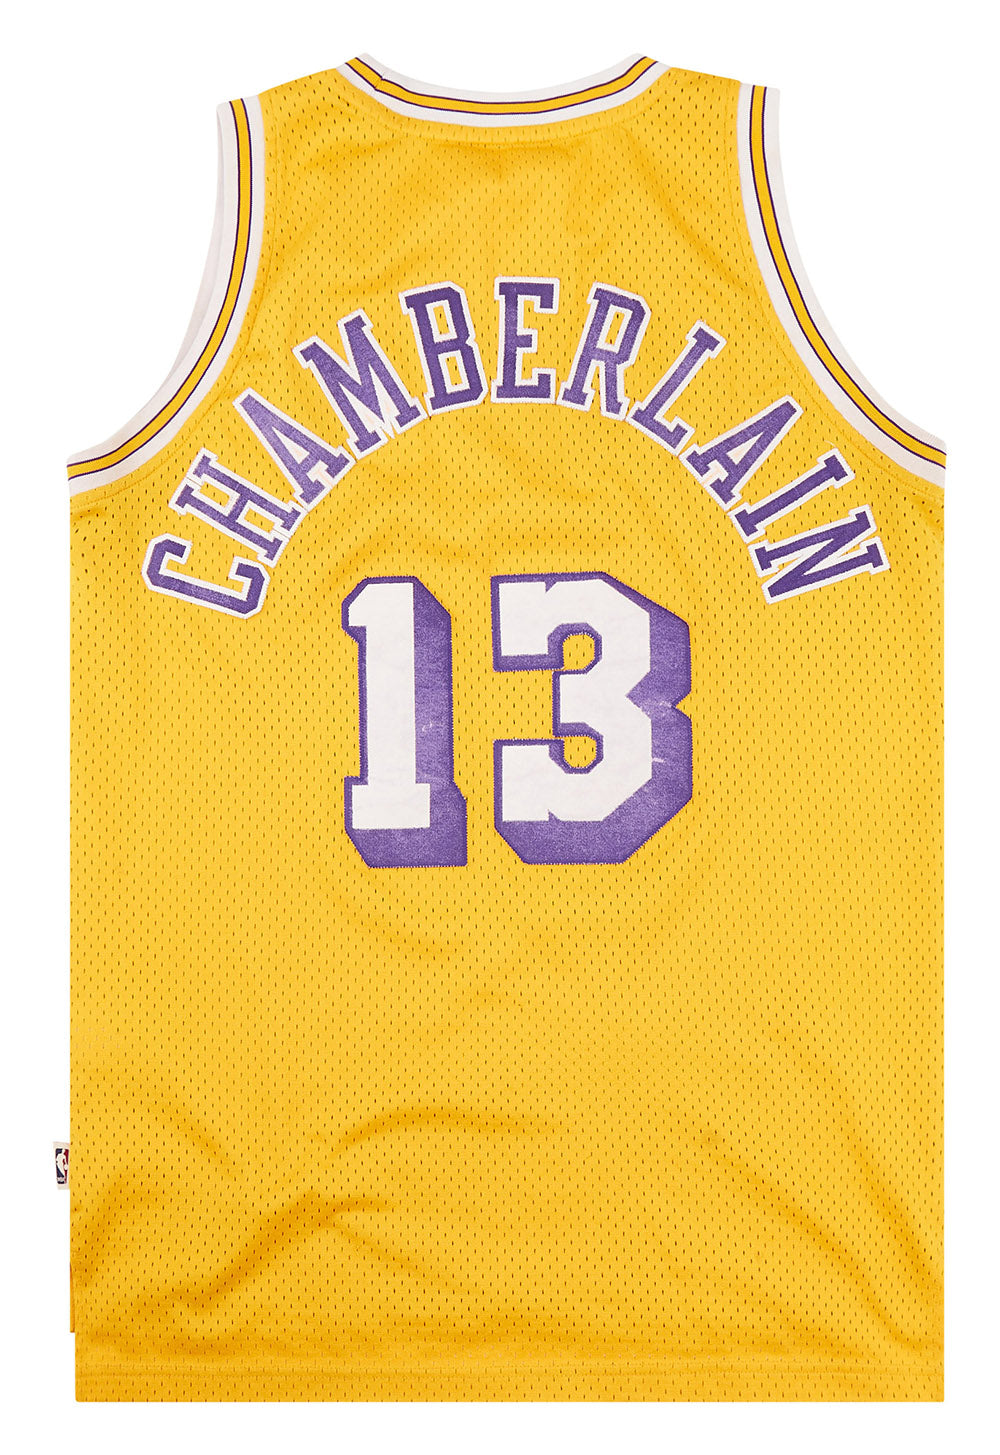 2021-23 LA Lakers James #6 Nike Swingman Away Jersey (XL)